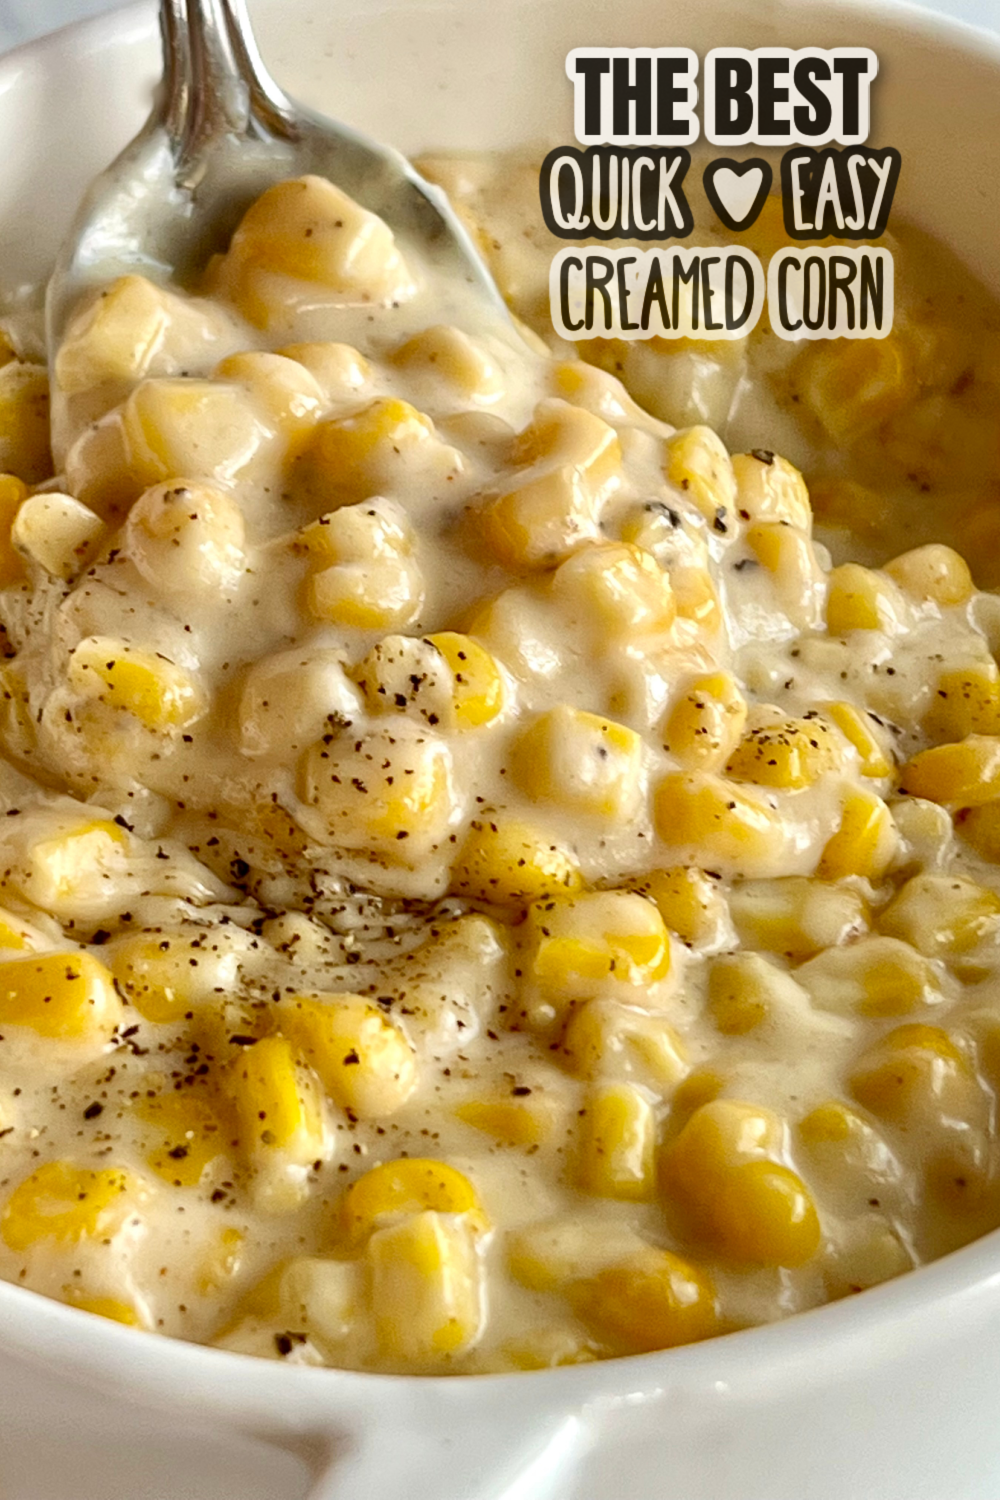 Homemade Creamed Corn (Quick & Easy)